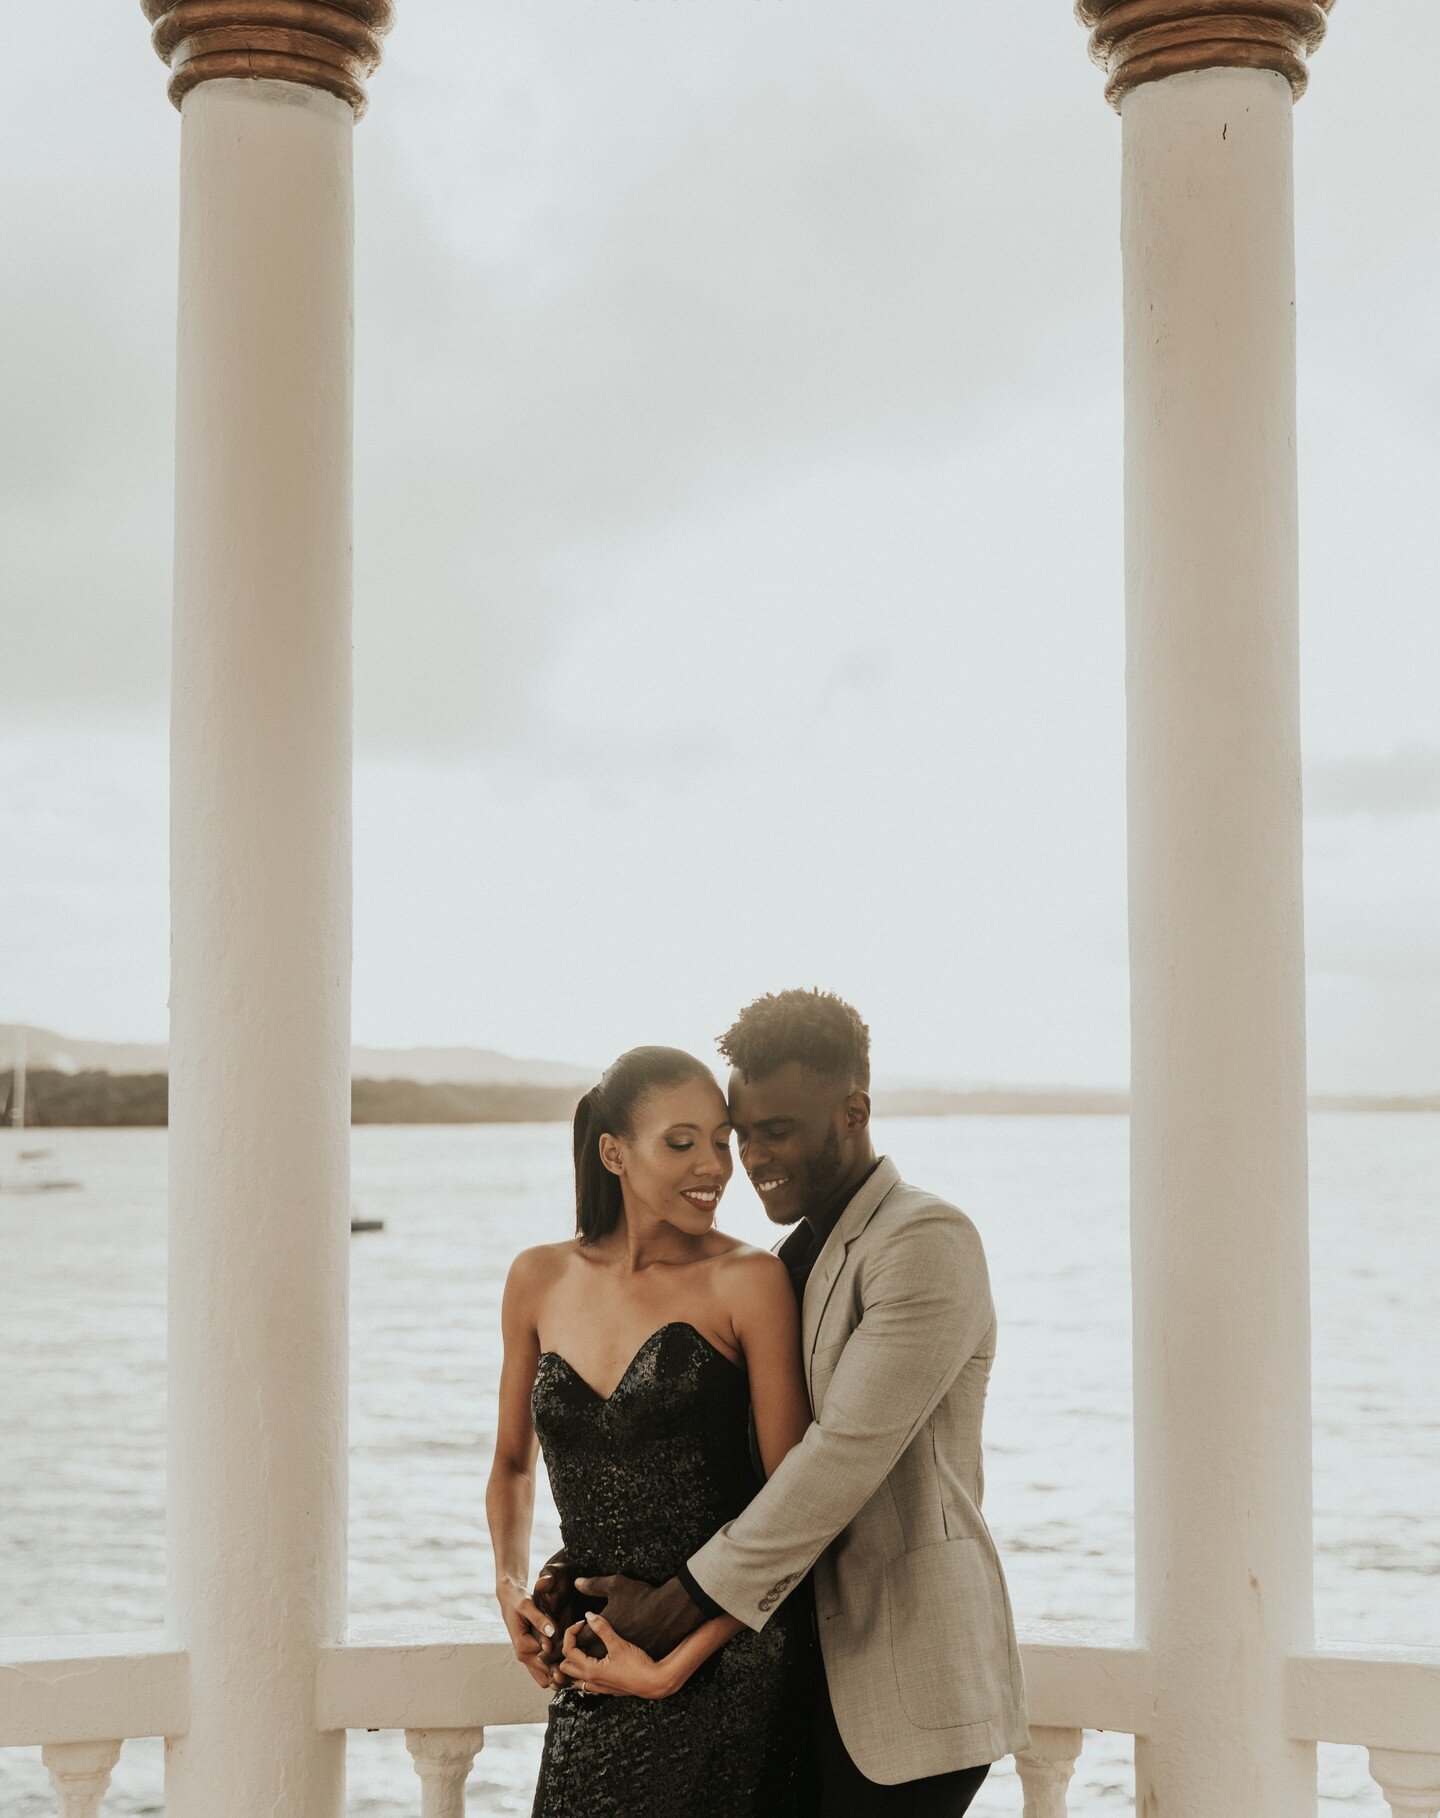 Salvador &amp; Windy at @piergiorgiohotel 

#sosua #puertoplata #dominicanrepublic #noviasrd #bodasrd #anniversary #wedding #blackdress #engagementsession